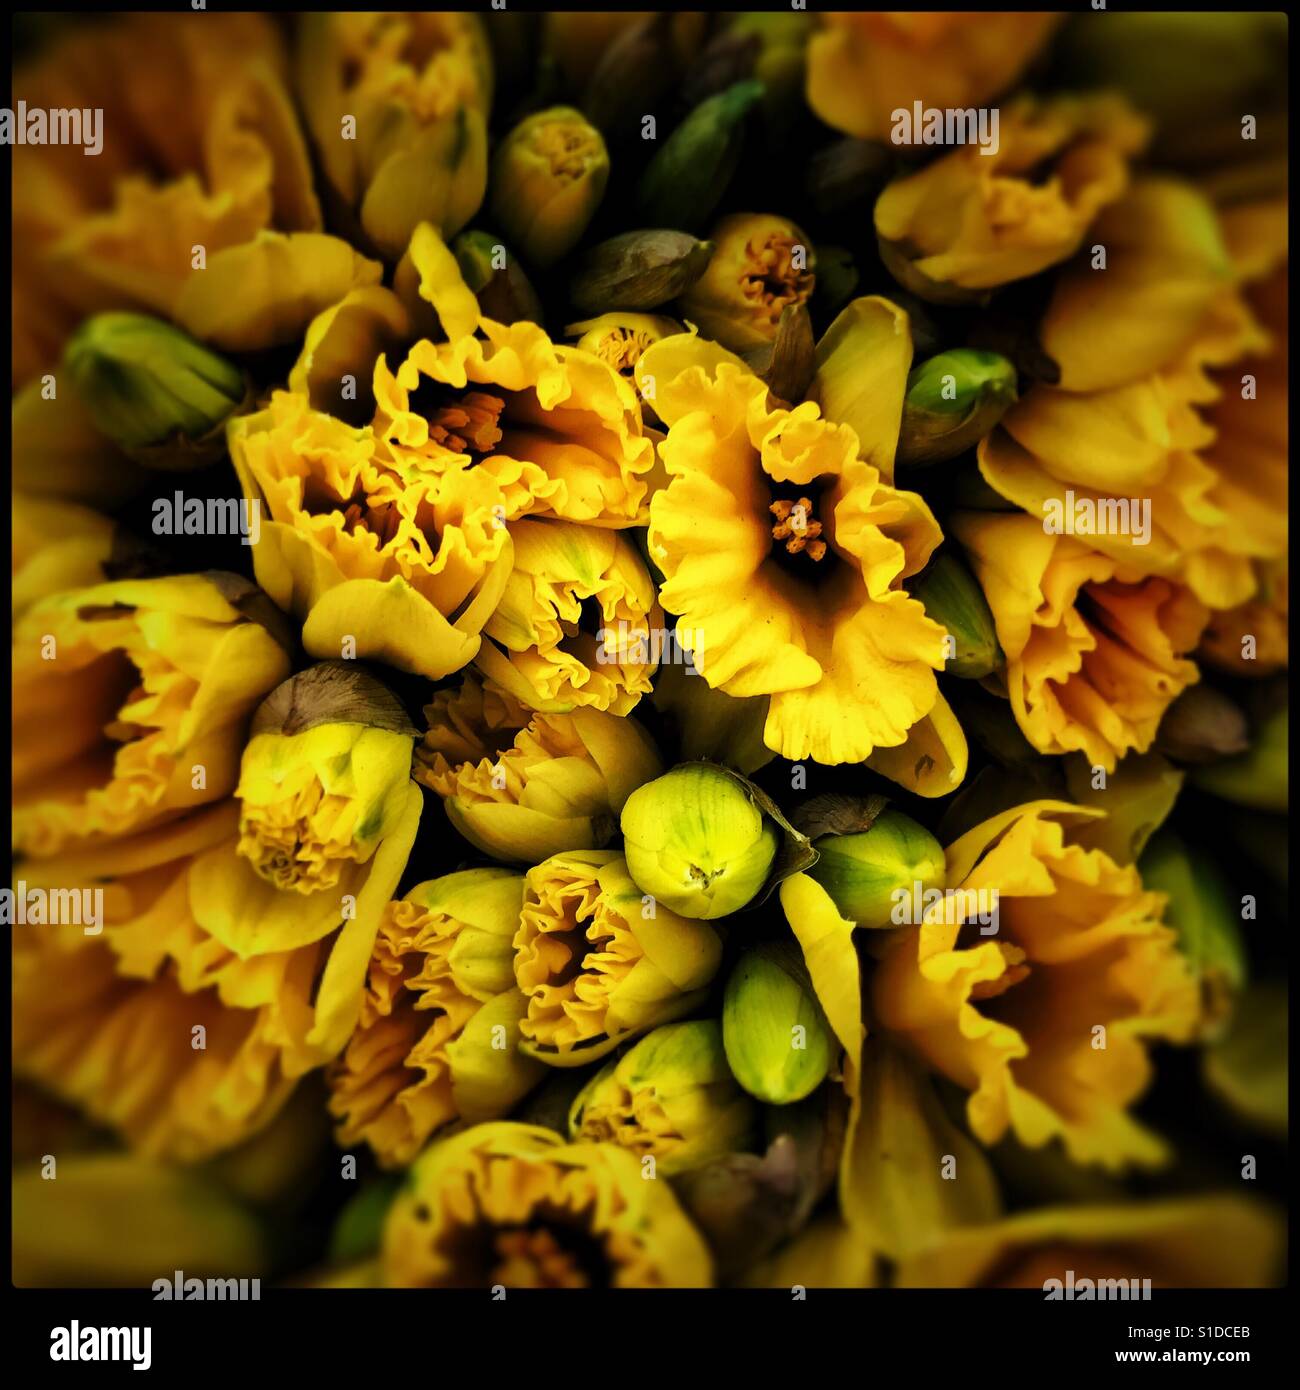 A bundle of daffodils Stock Photo